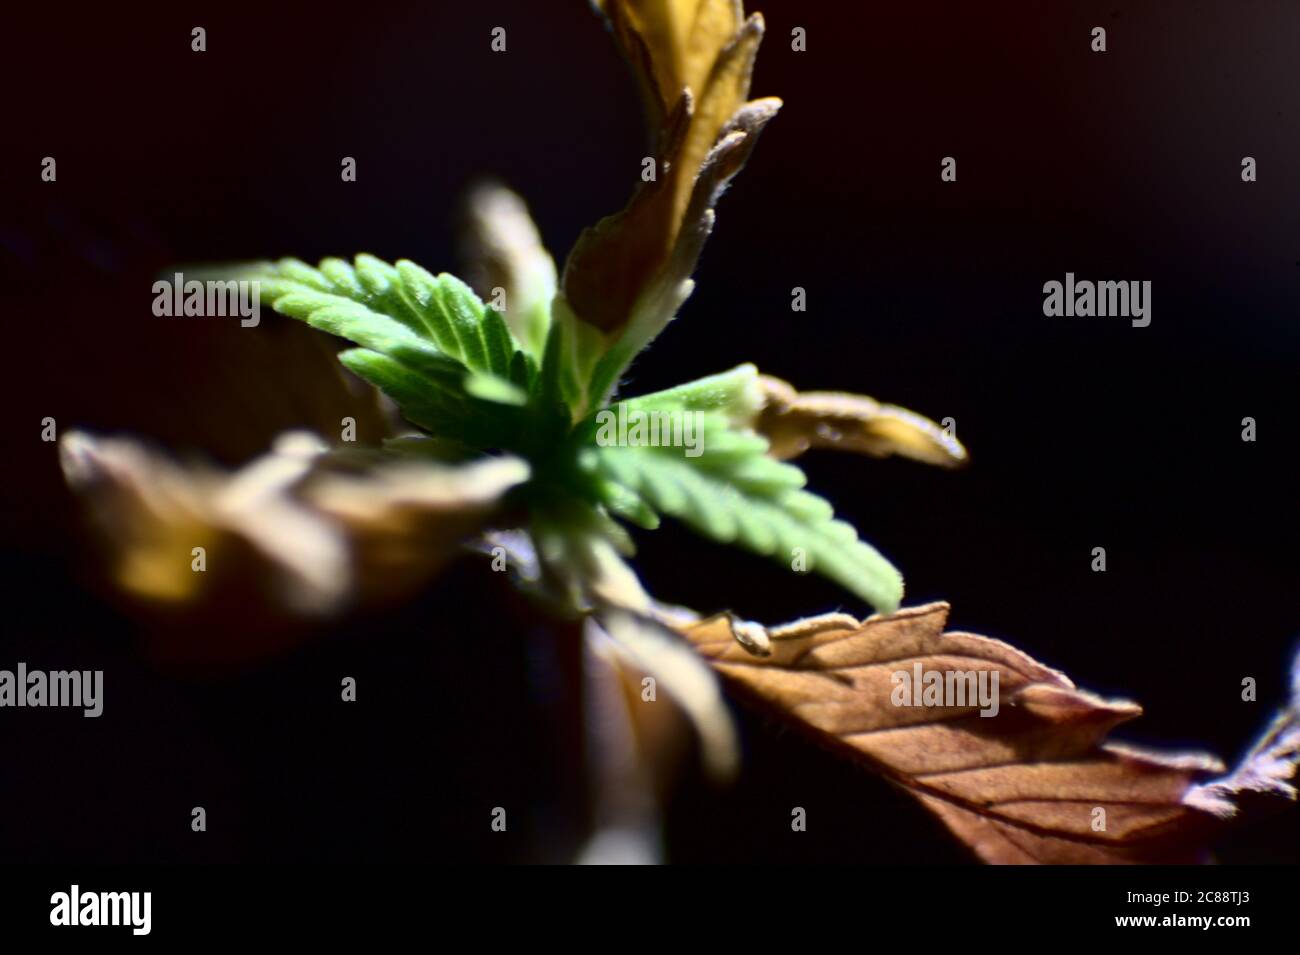 Sick cannabis baby plant, Stock Photo